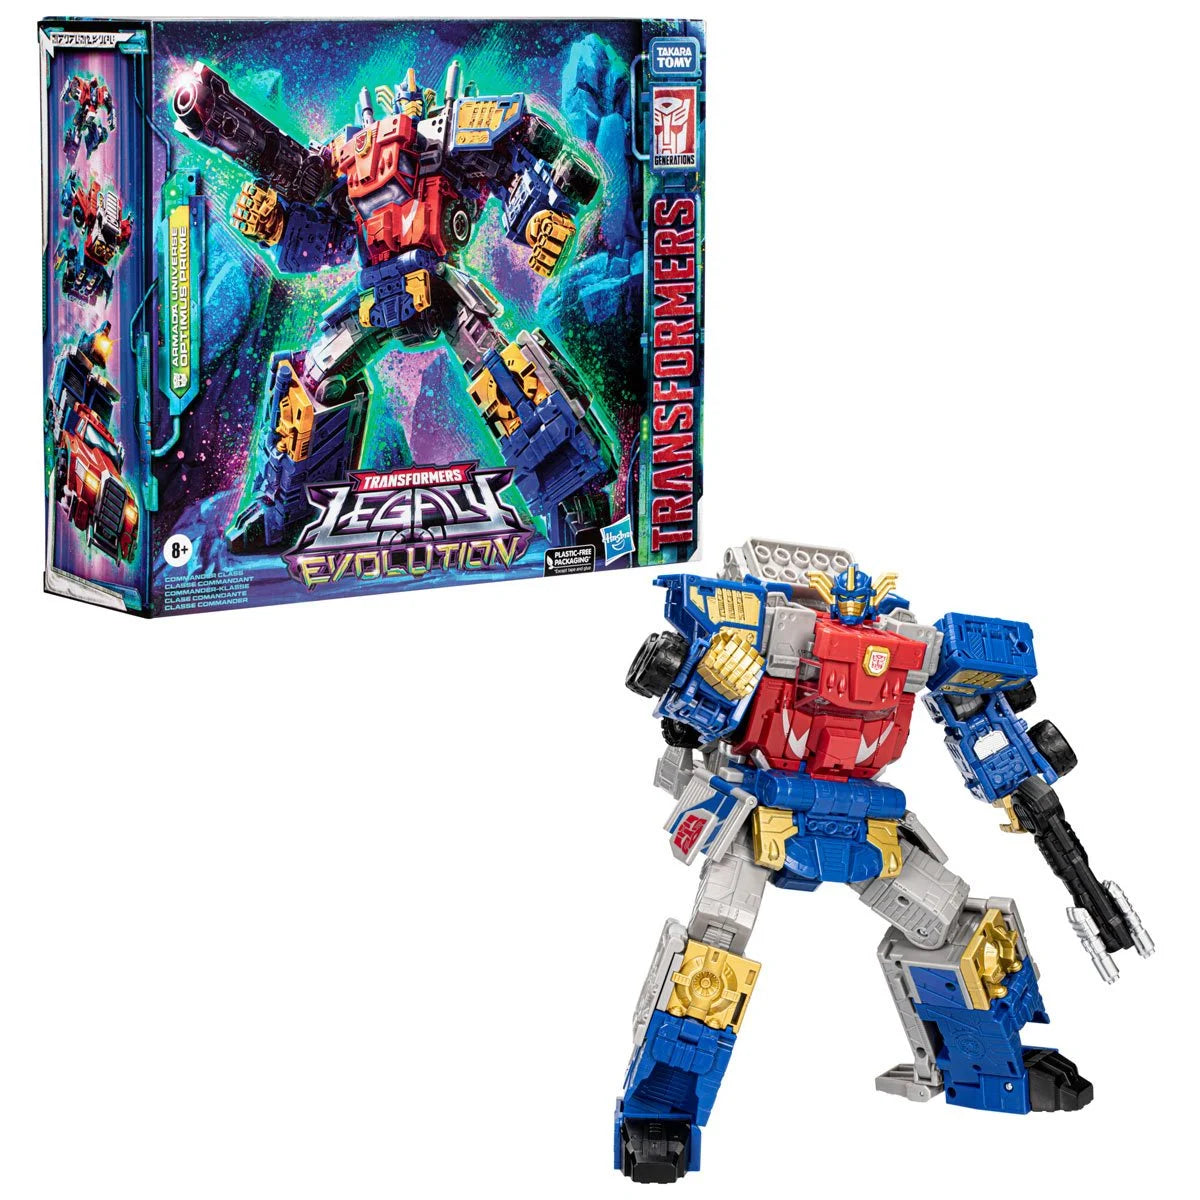 Transformers Legacy Evolution Commander Armada Universe Optimus Prime Action Figure Toy - Heretoserveyou